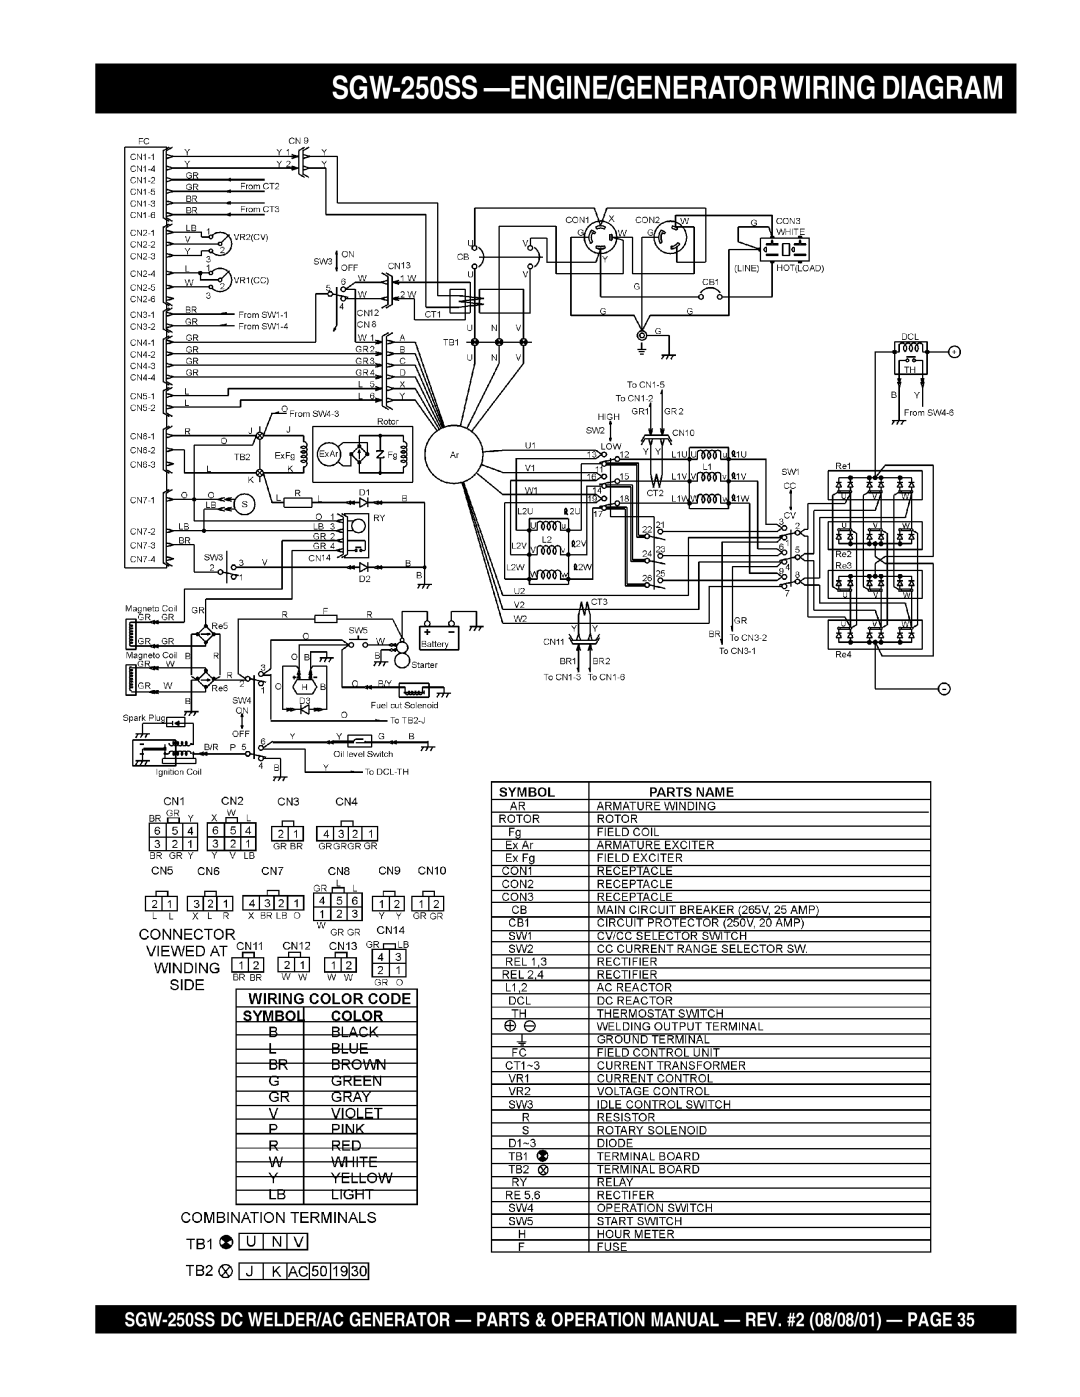 Multiquip operation manual SGW-250SS -ENGINE/GENERATORWIRINGDIAGRAM 